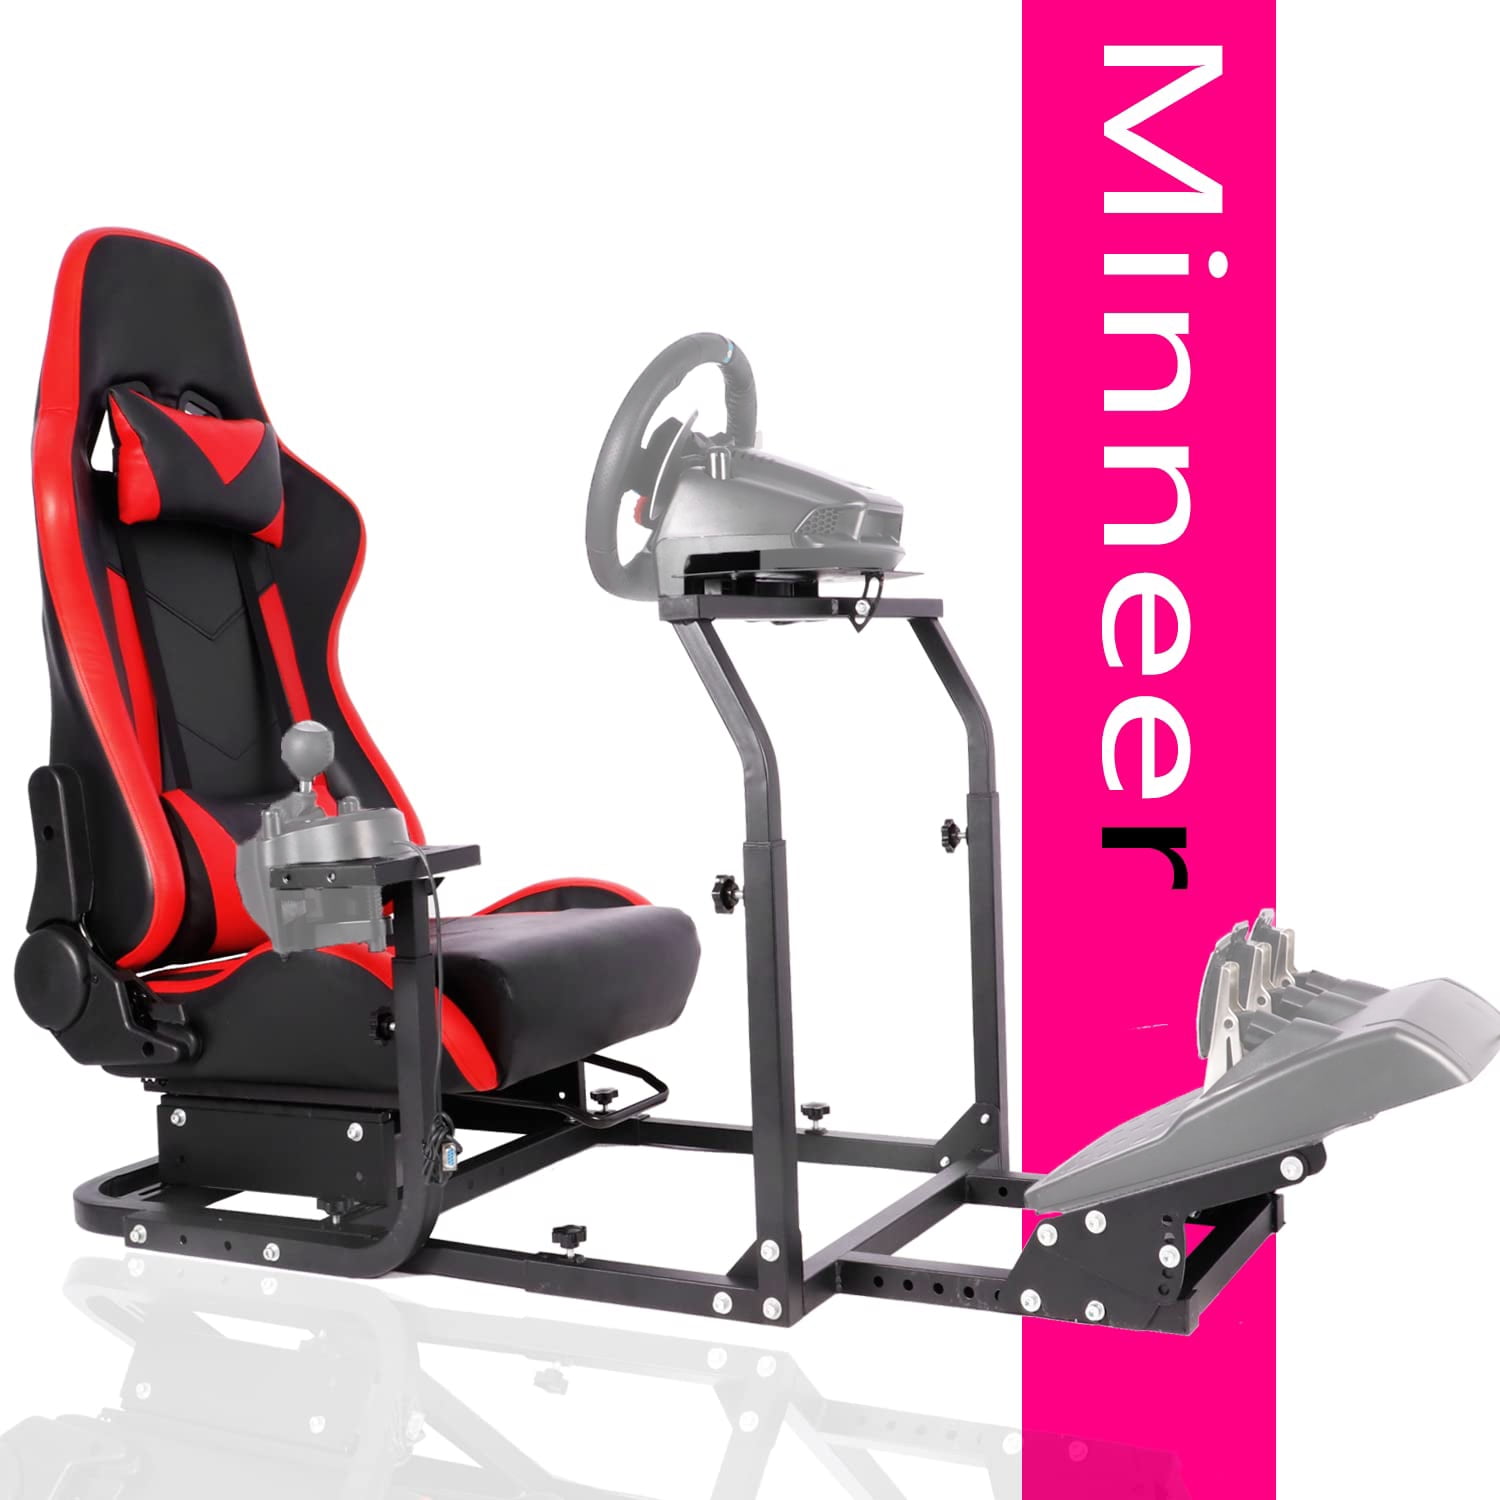 Minneer Sim racing Fit for Logitech G25/G27/G29/G920/G923 Steering Red Seat - Walmart.com